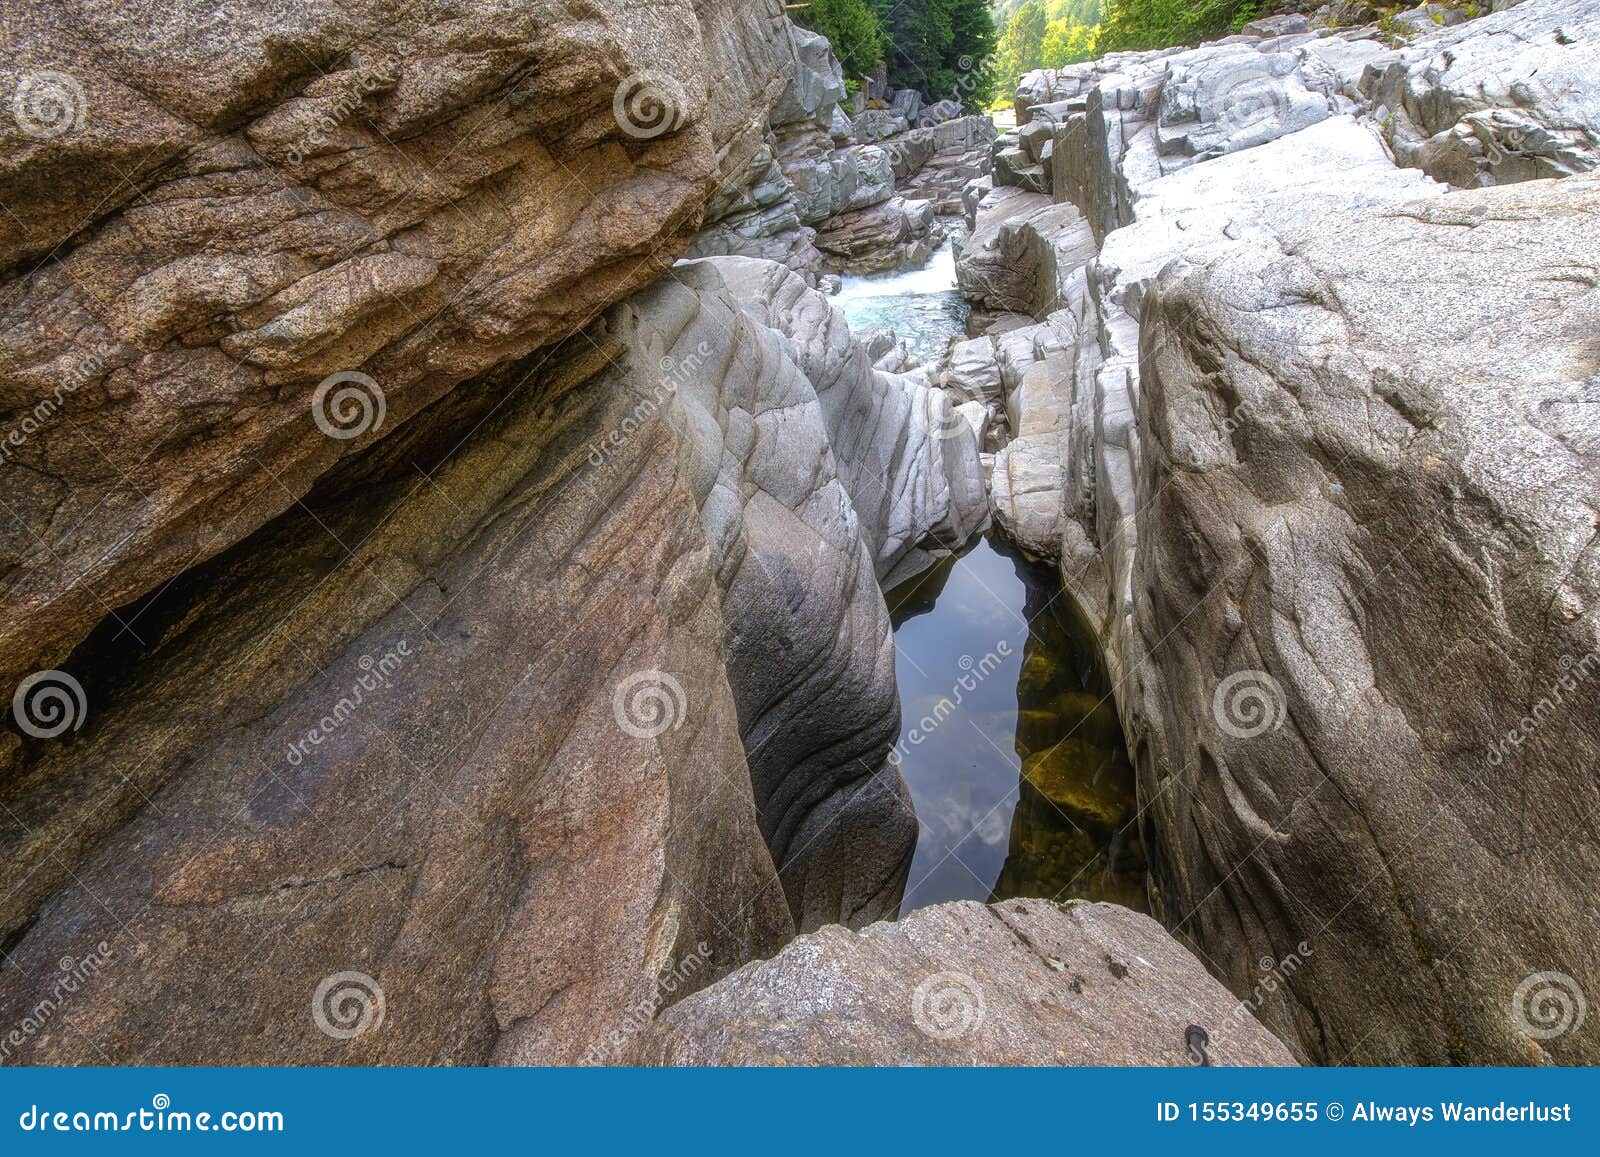 canyon falls is an off the beaten path waterfall in barring washington